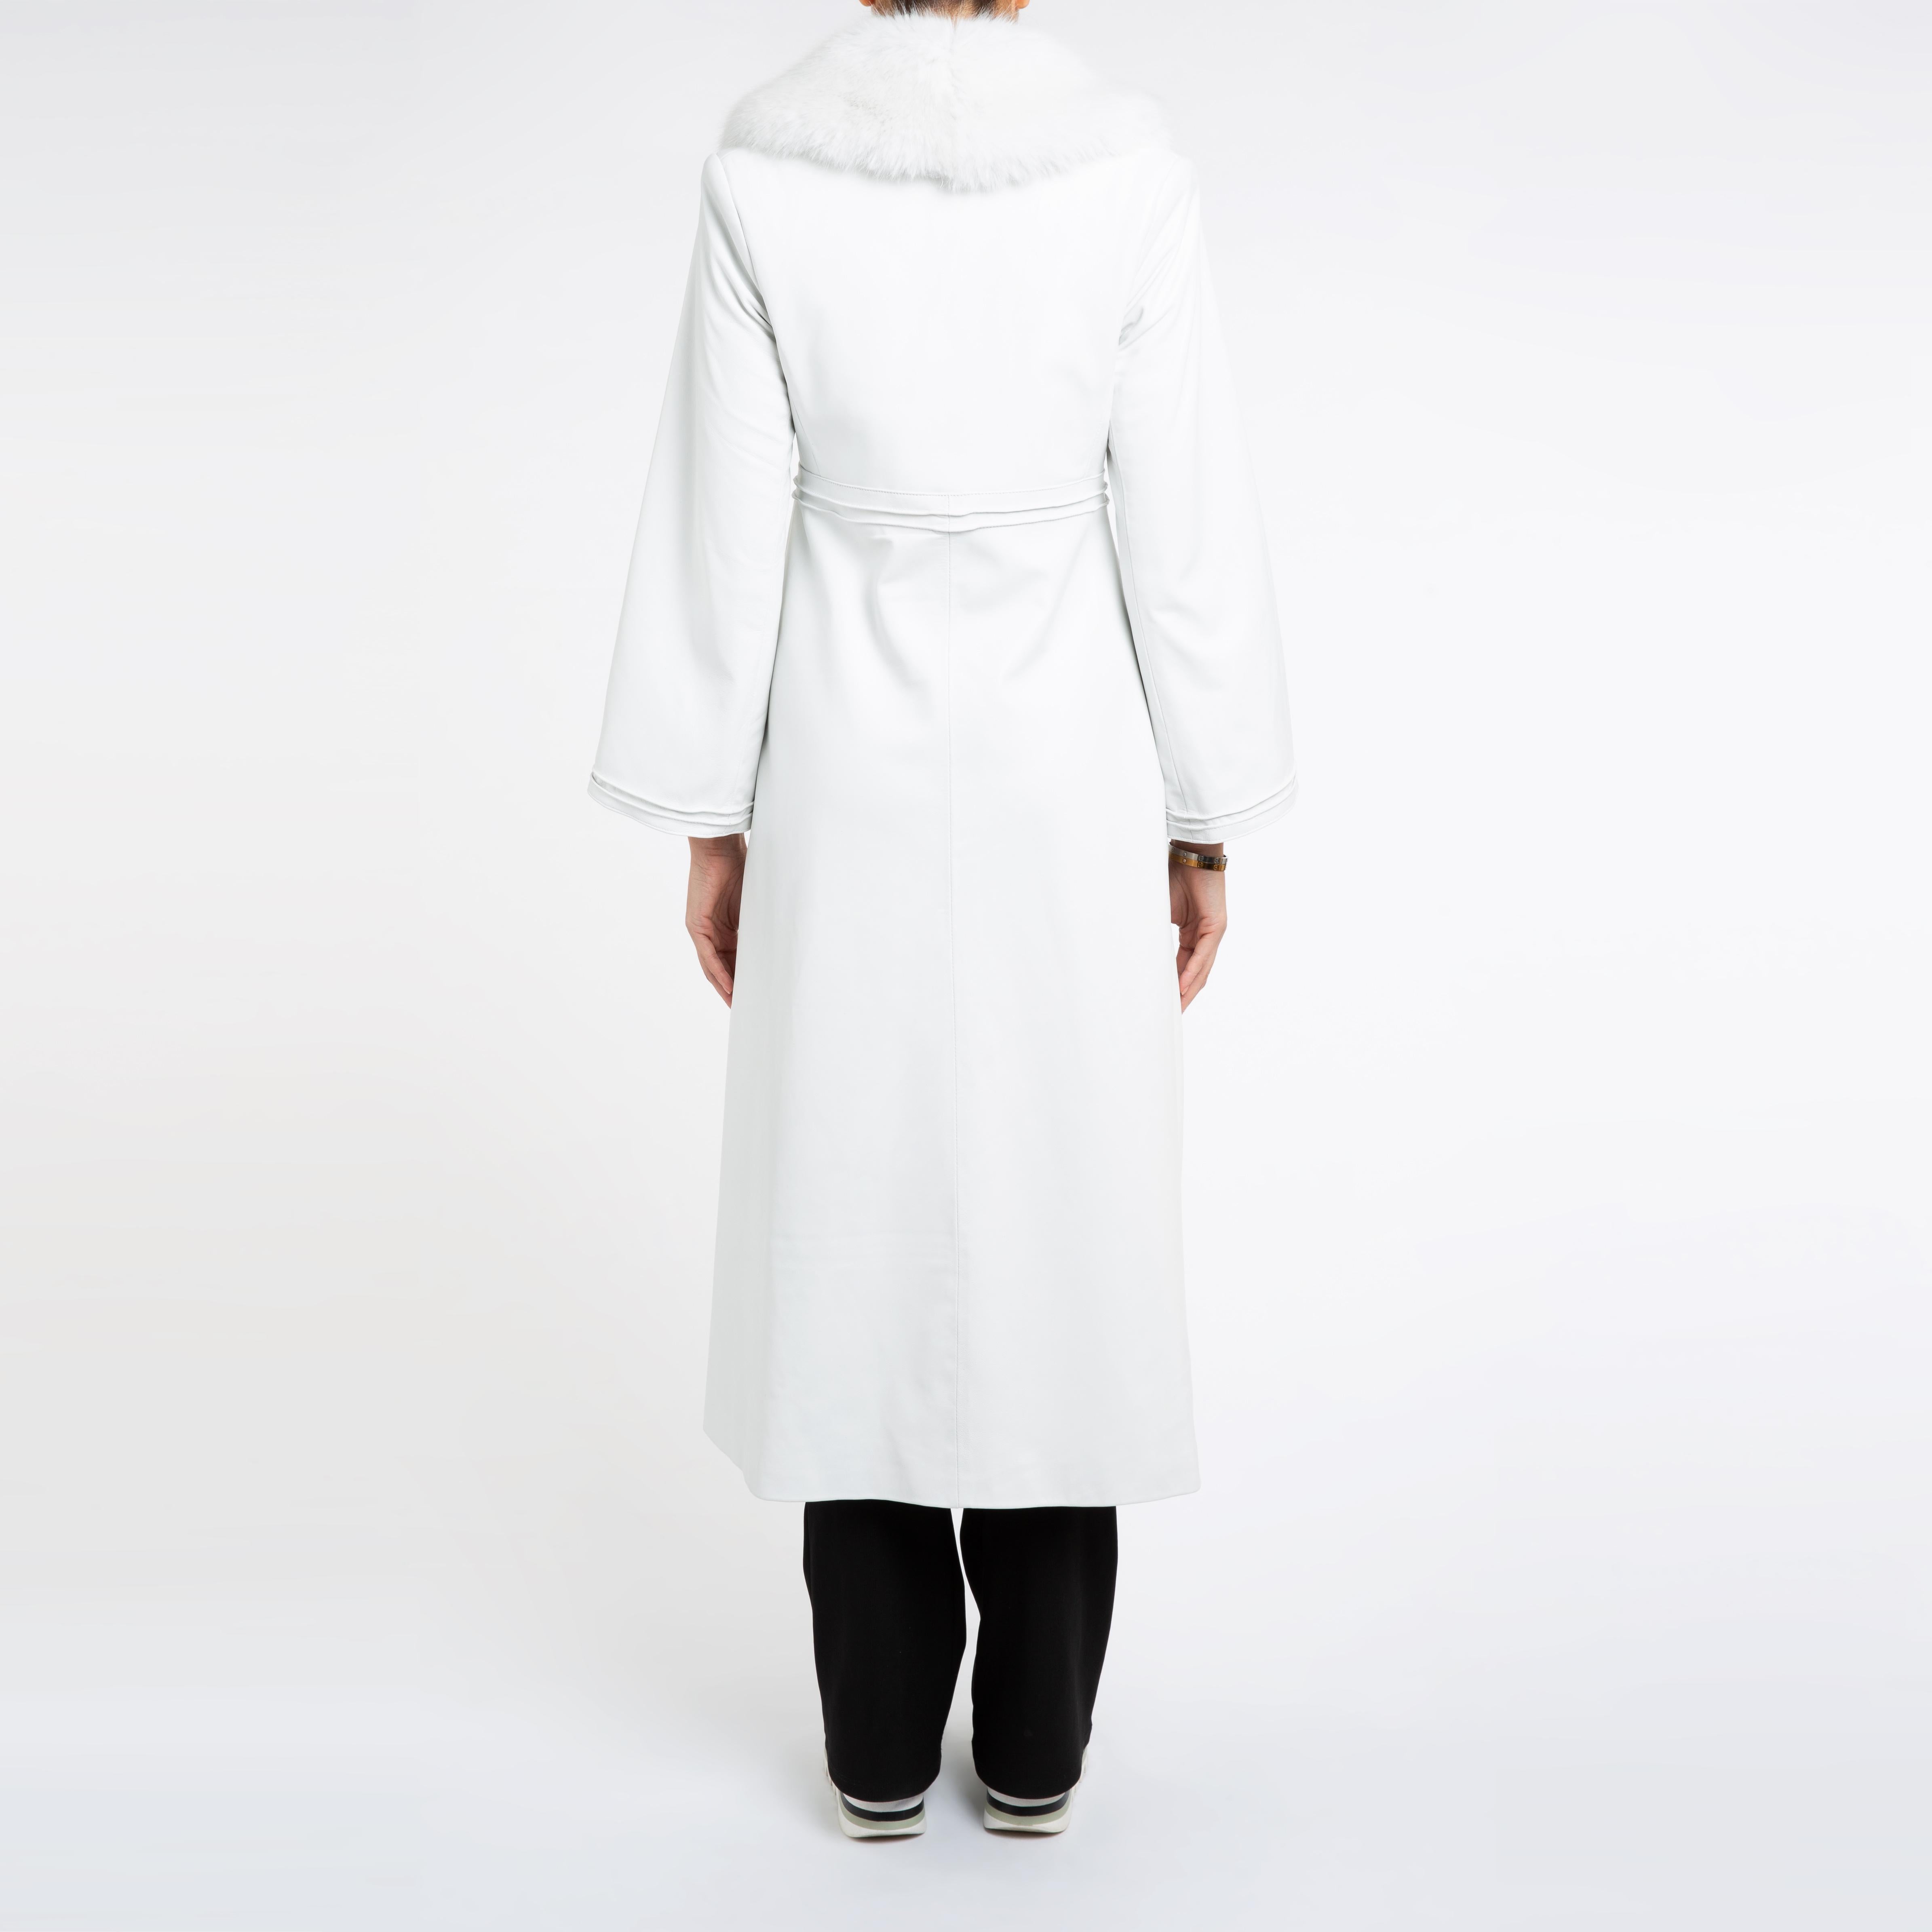 Verheyen London Edward Leather Coat in White with Faux Fur - Size uk 12 For Sale 4